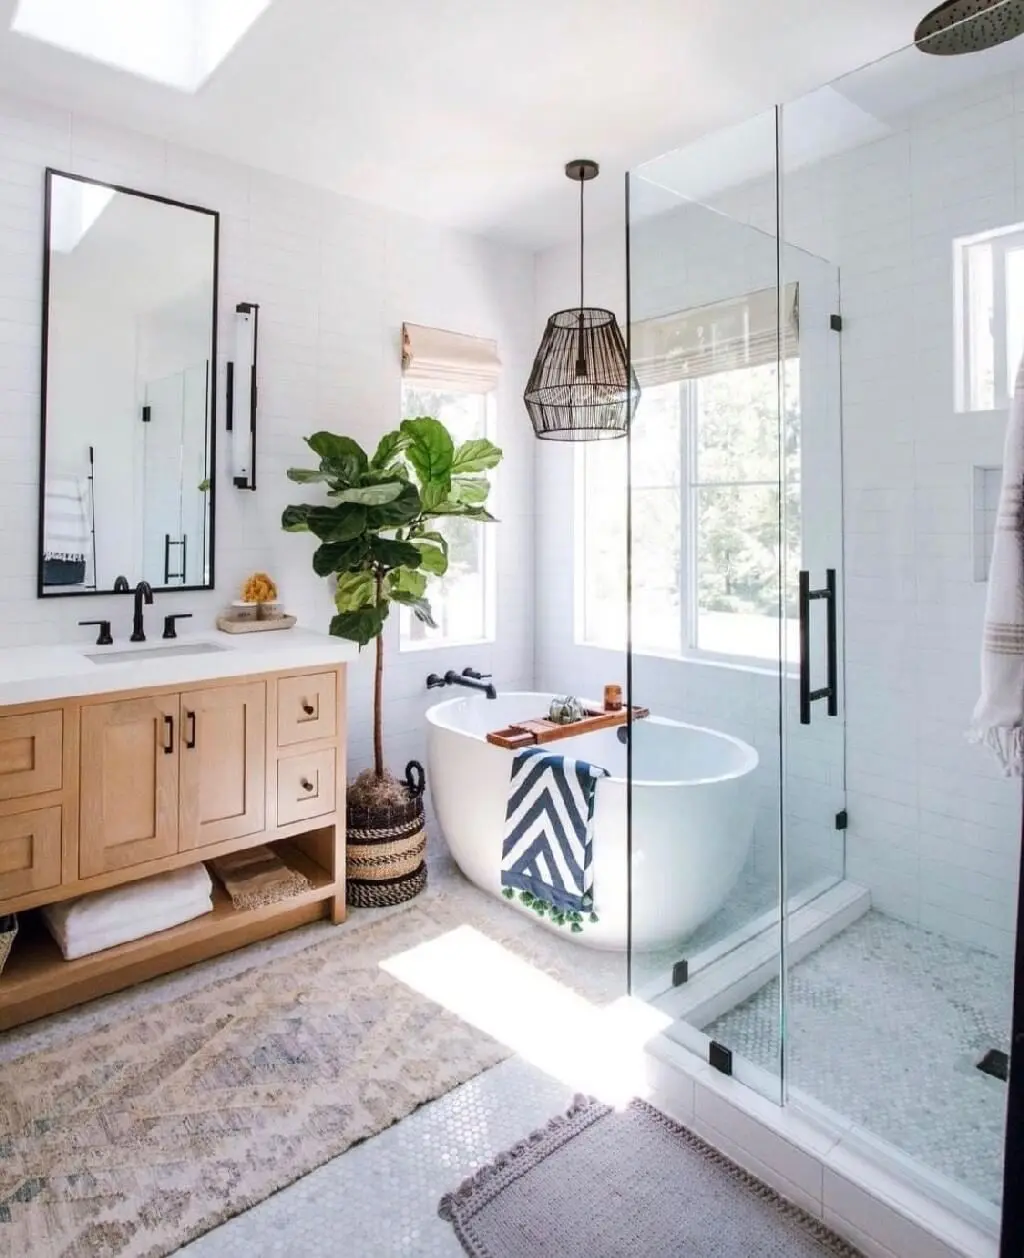 https://hommes.studio/wp-content/uploads/6-Cleaver-Ways-to-Spice-Up-a-Bland-Bathroom-Design.jpg.webp